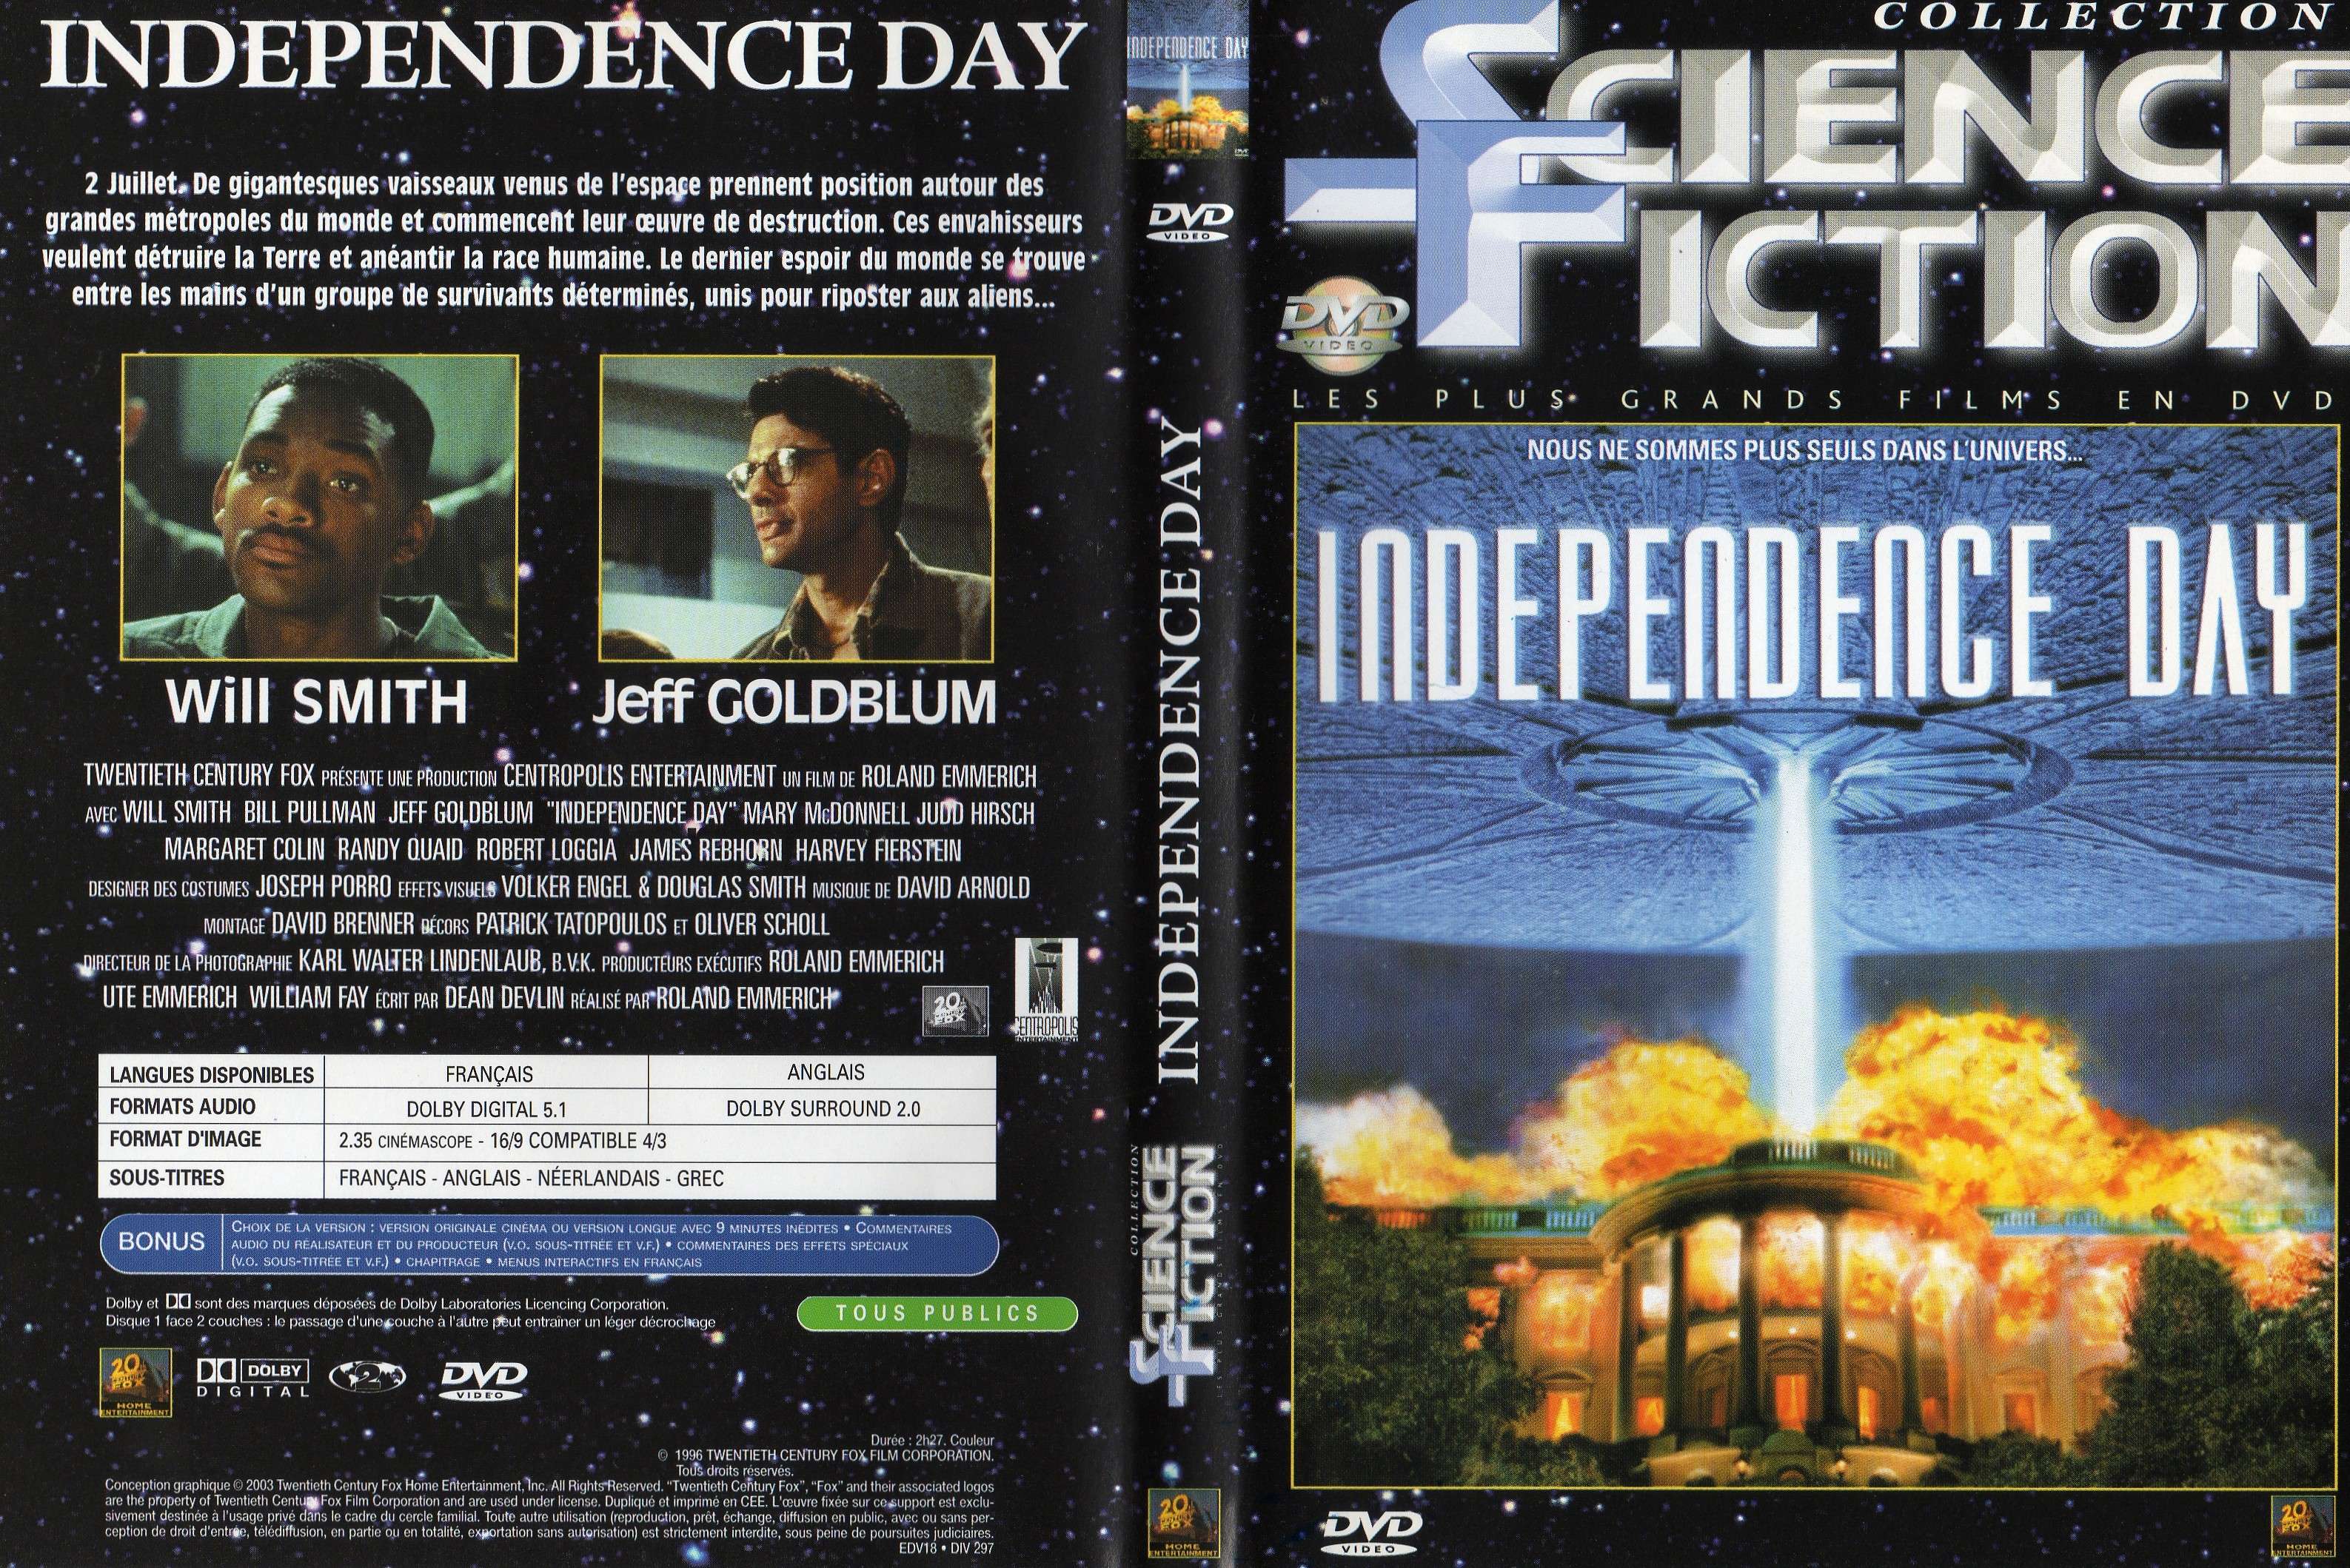 Jaquette DVD Independence day v2